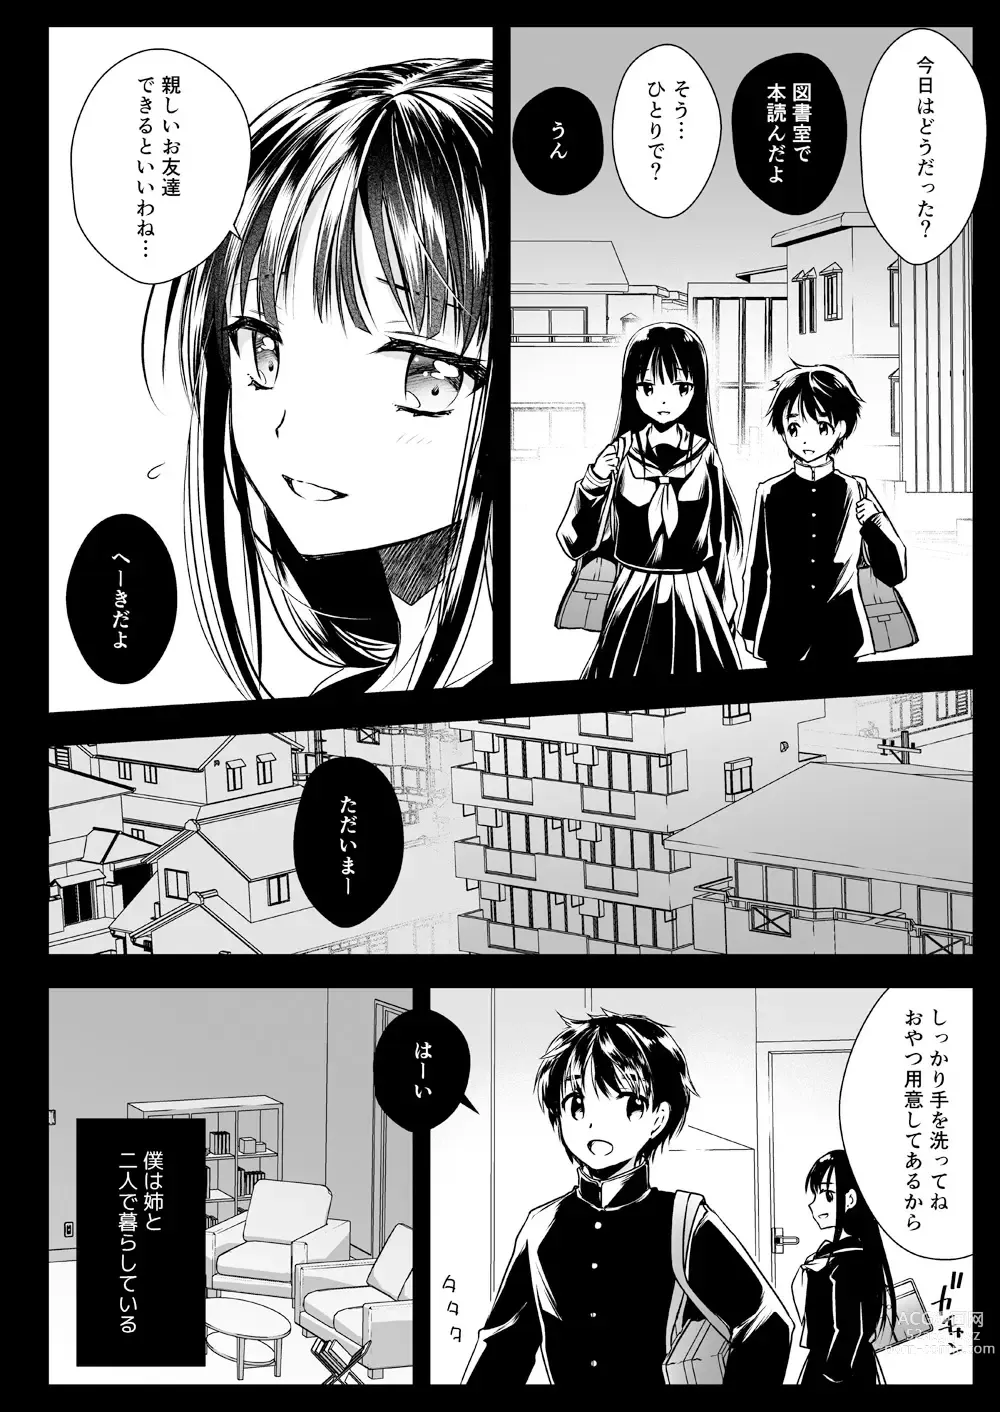 Page 3 of manga Kyou izon Kyoudai